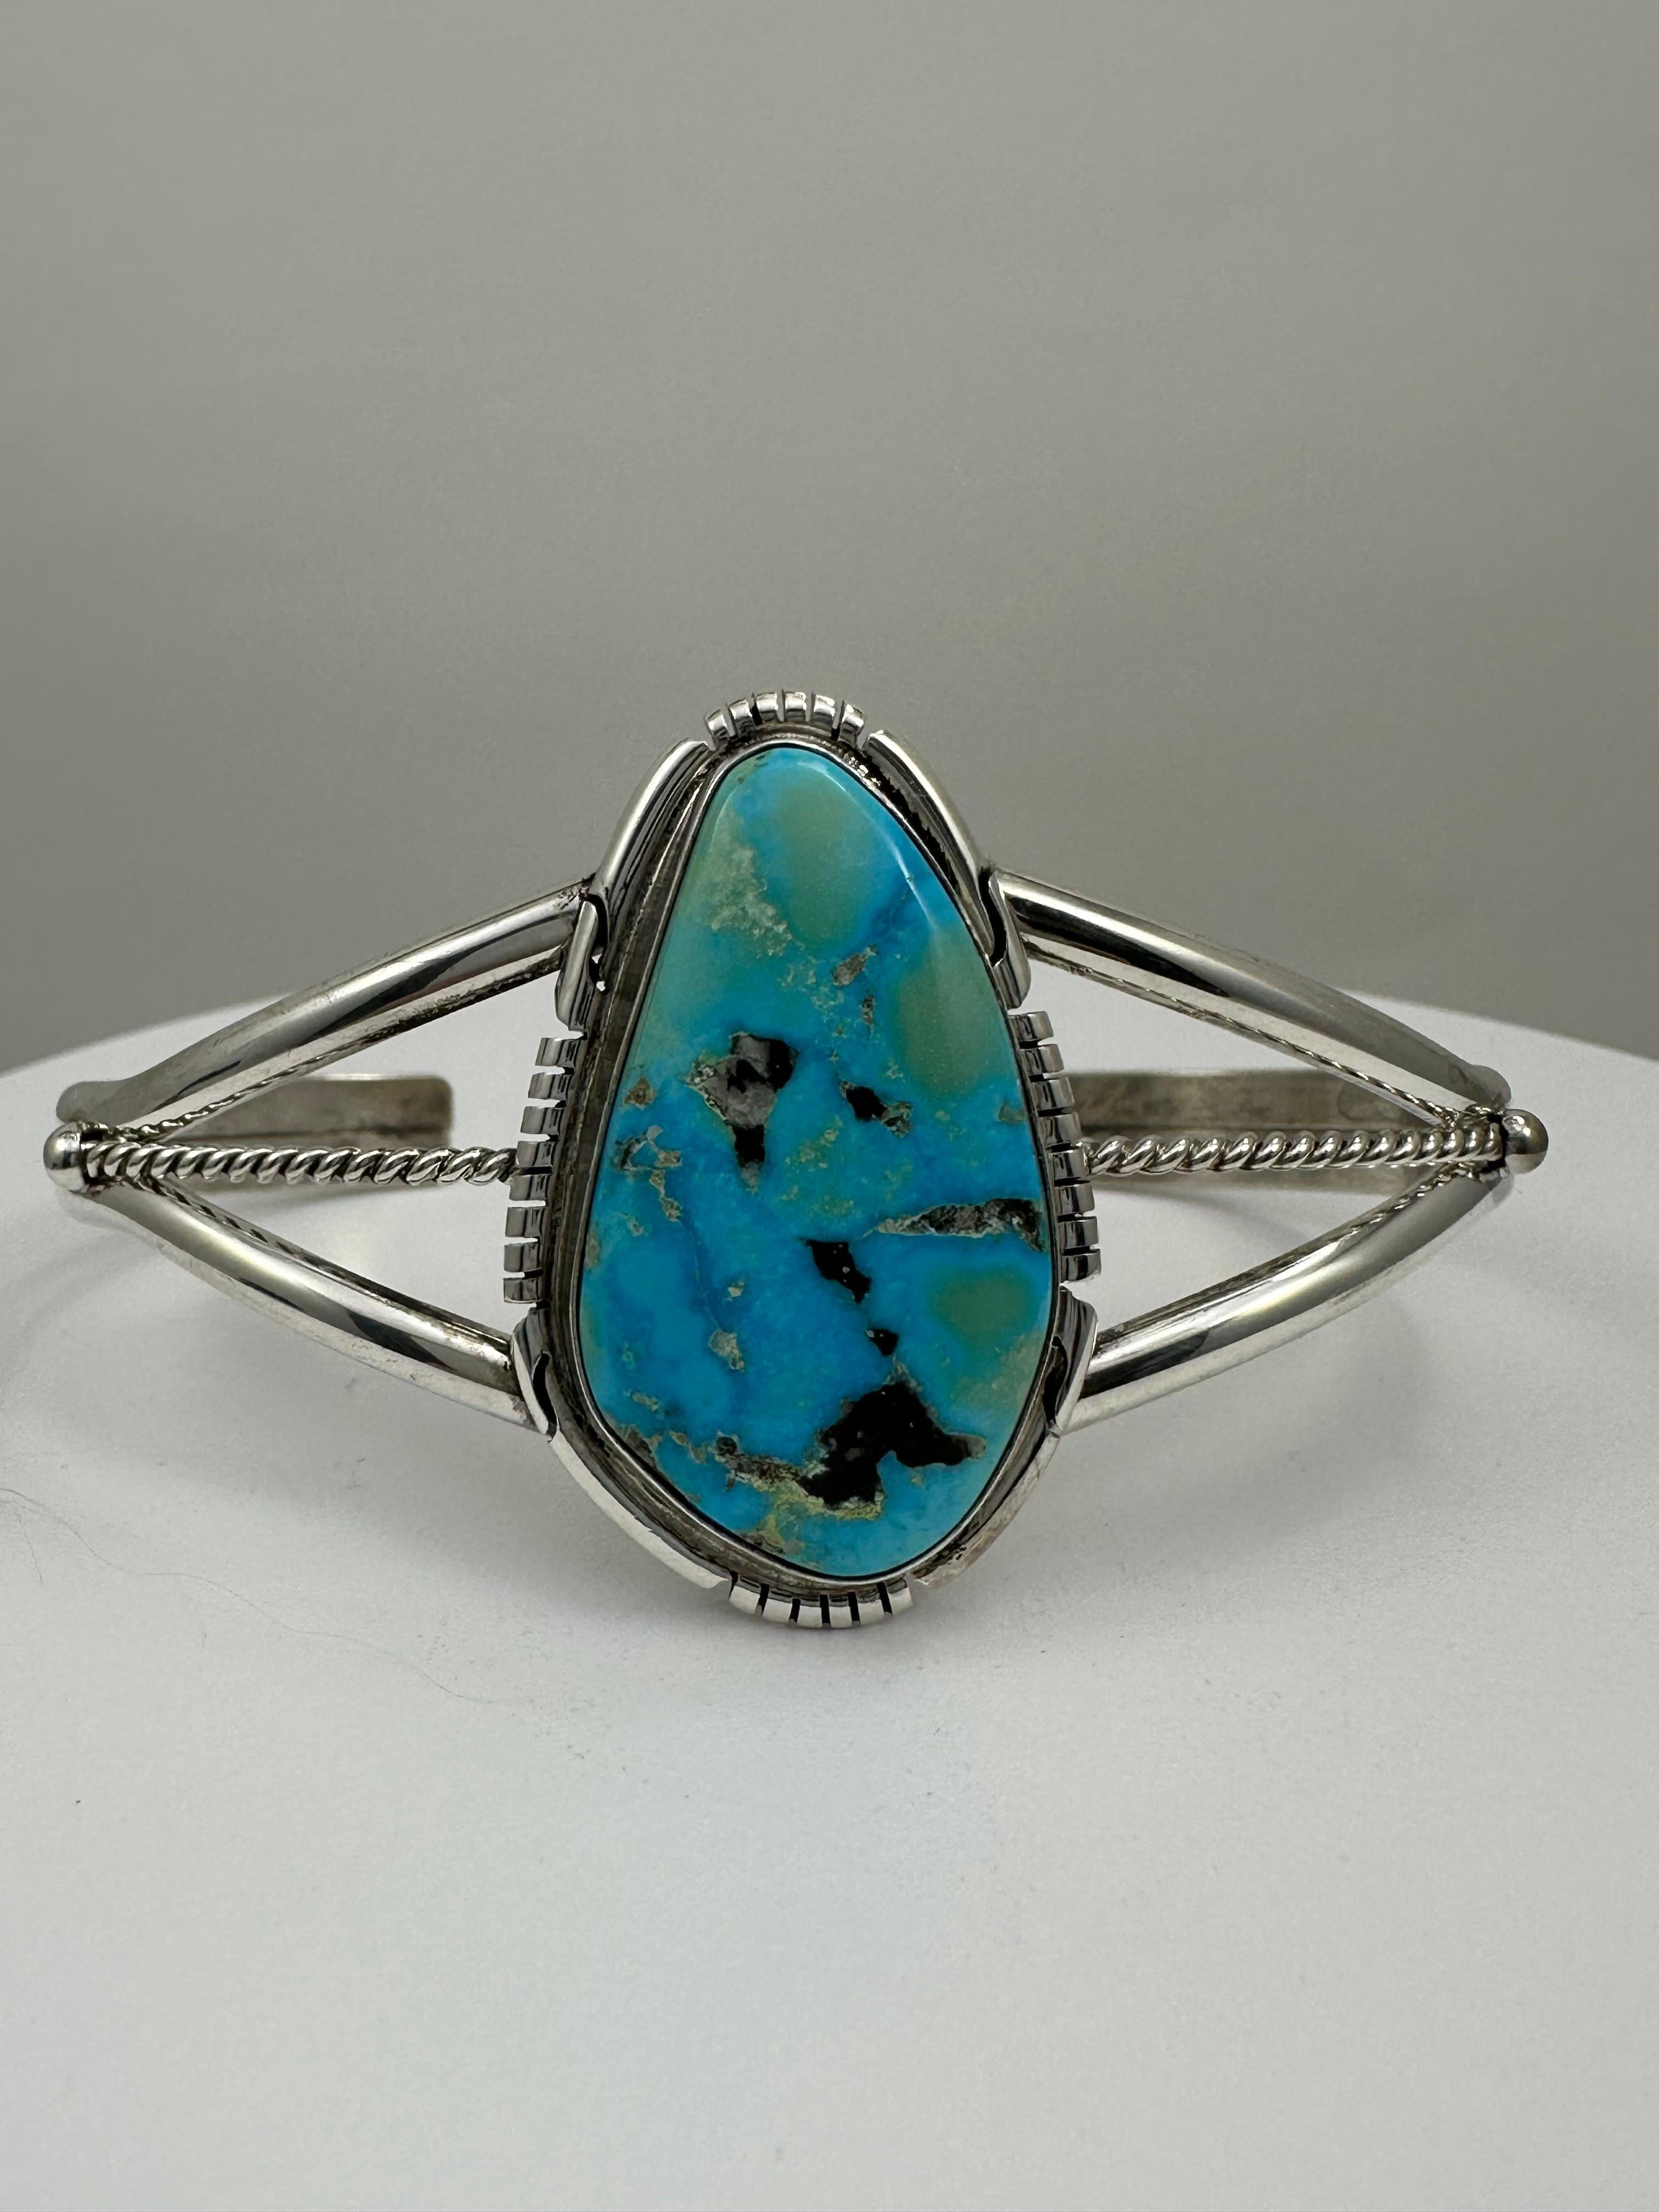 Sterling Silver .925 Kingman Turquoise Navajo Handmade Cuff Bracelet Signed Dave Skeets
2 1/2